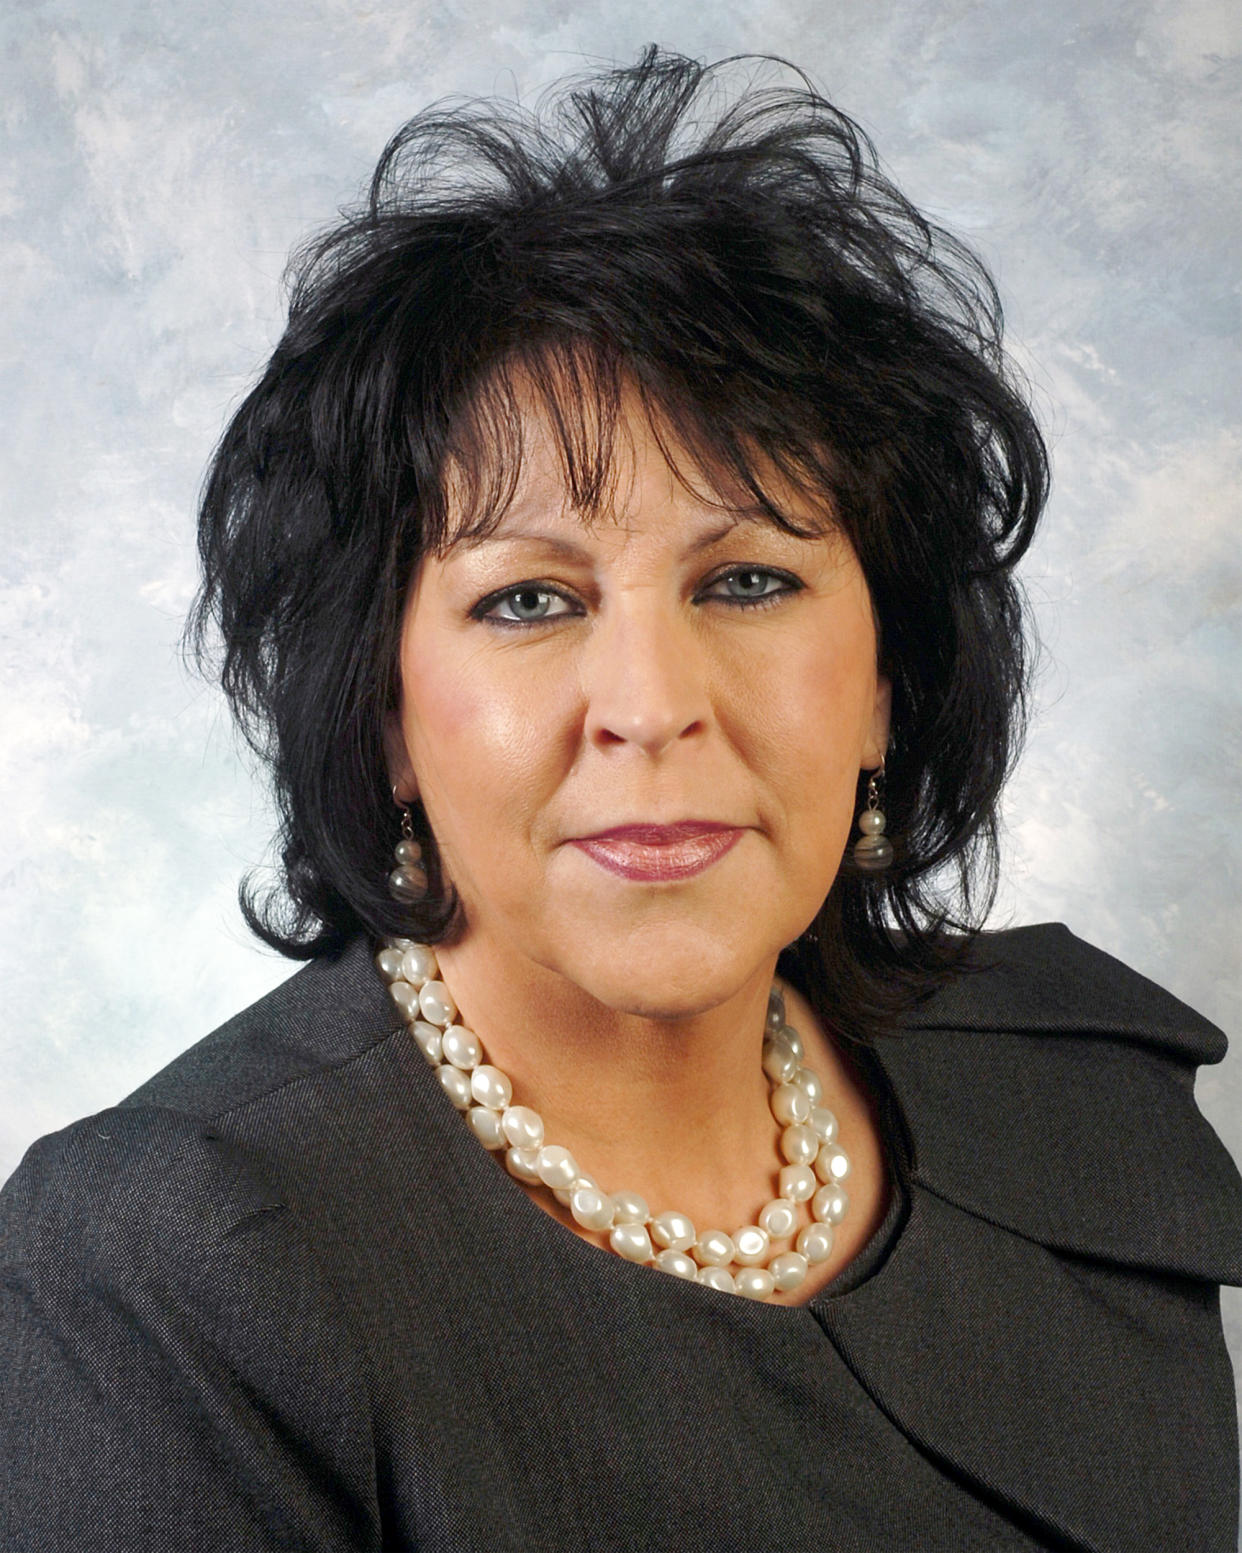 Kentucky State Rep. Regina Huff, R-Williamsburg. (gov't image: https://legislature.ky.gov/Legislators/Pages/Legislator-Profile.aspx?DistrictNumber=82)